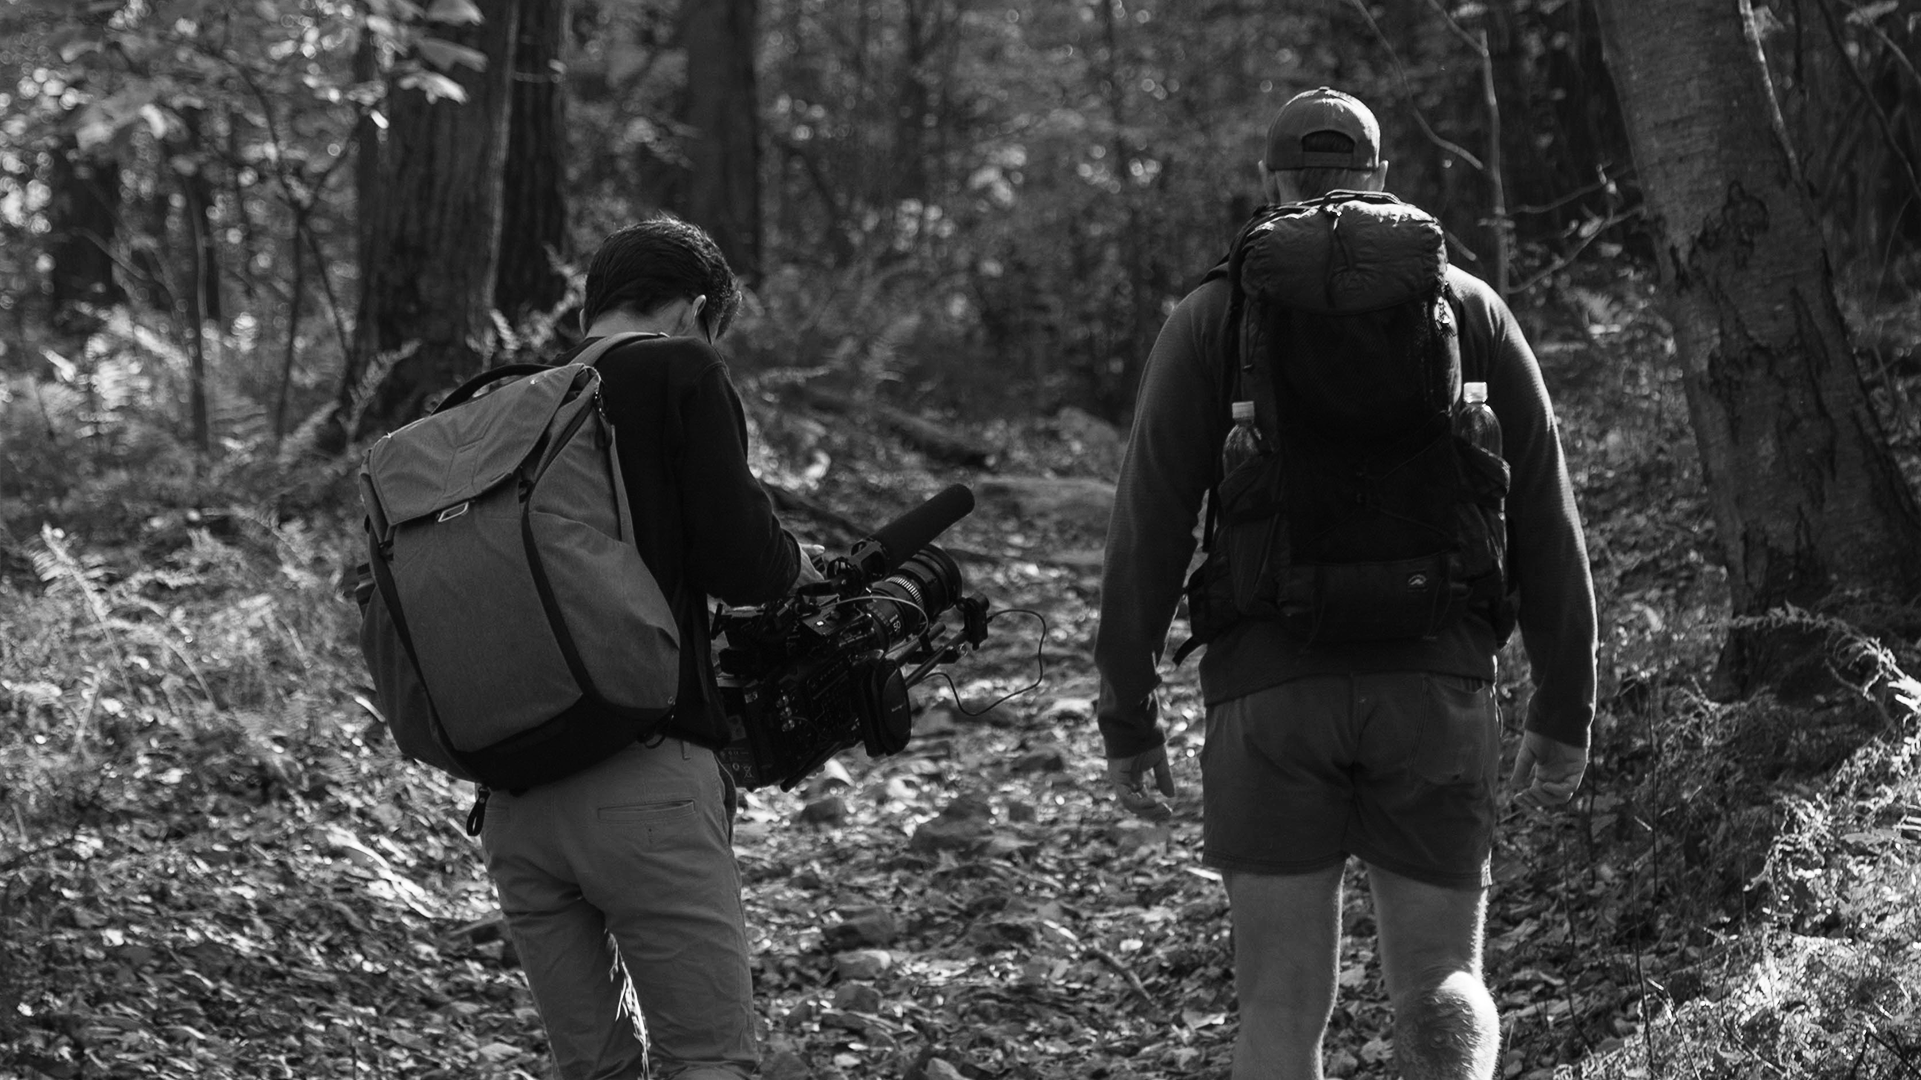 Behind the Scenes Filming in Pennsylvania woods